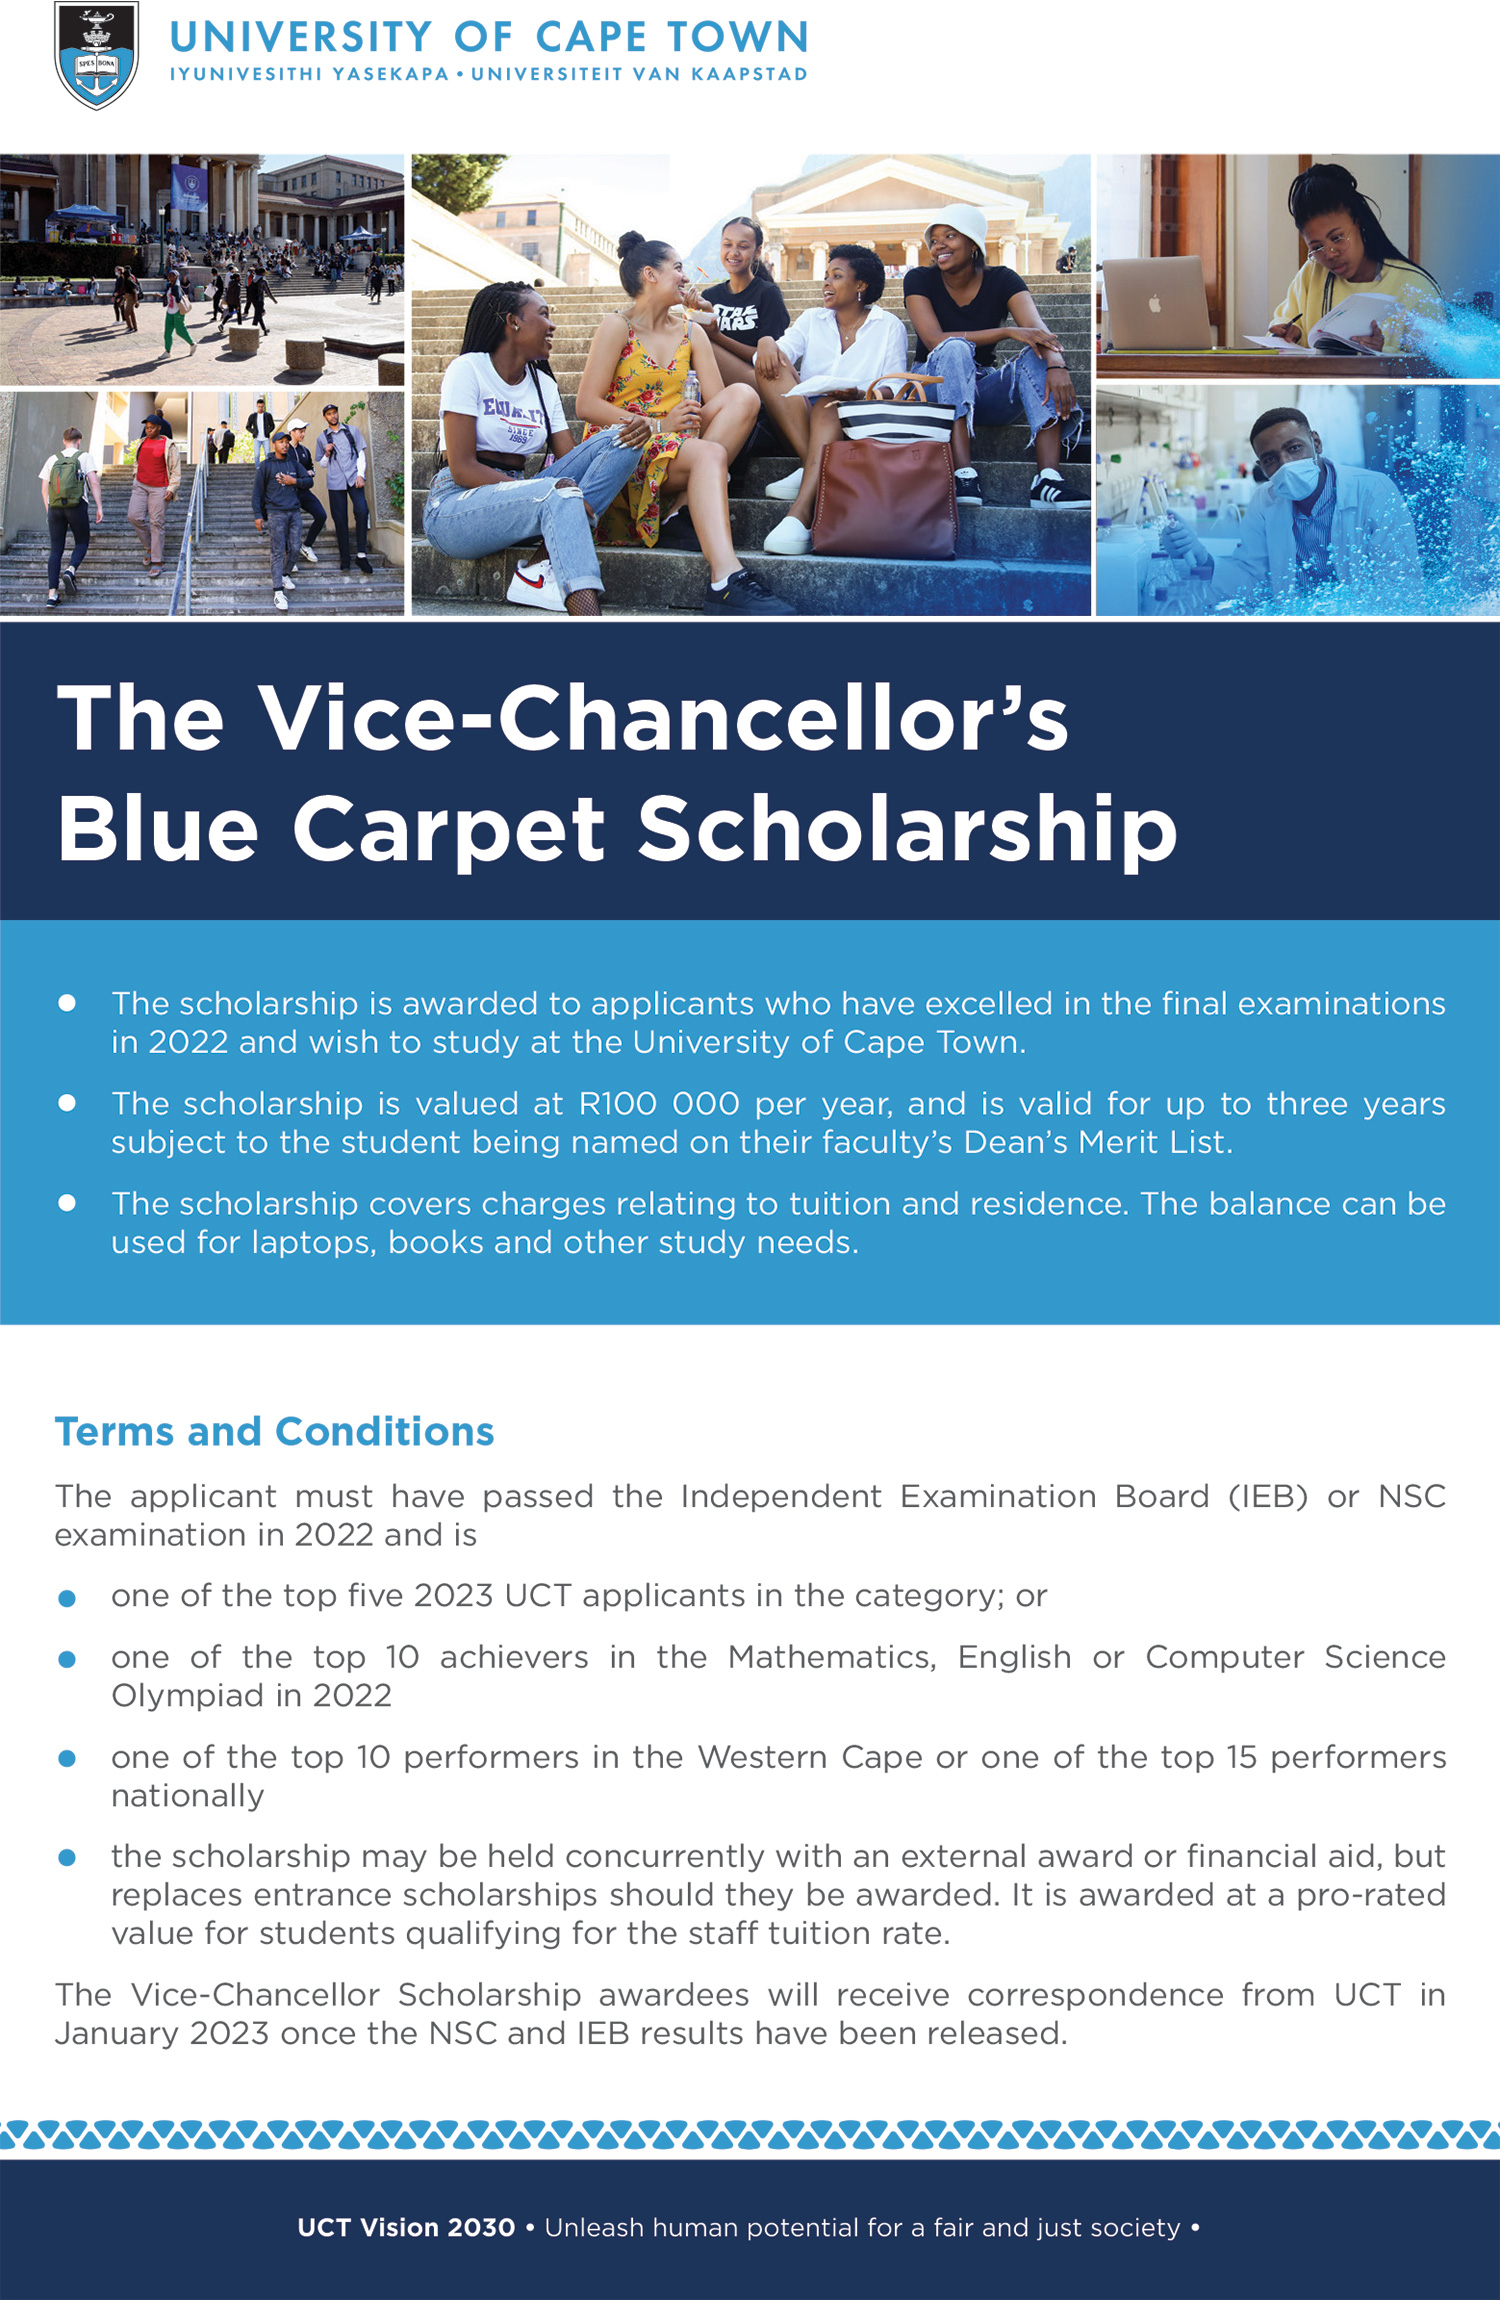 The Vice-Chancellor’s Blue Carpet Scholarship